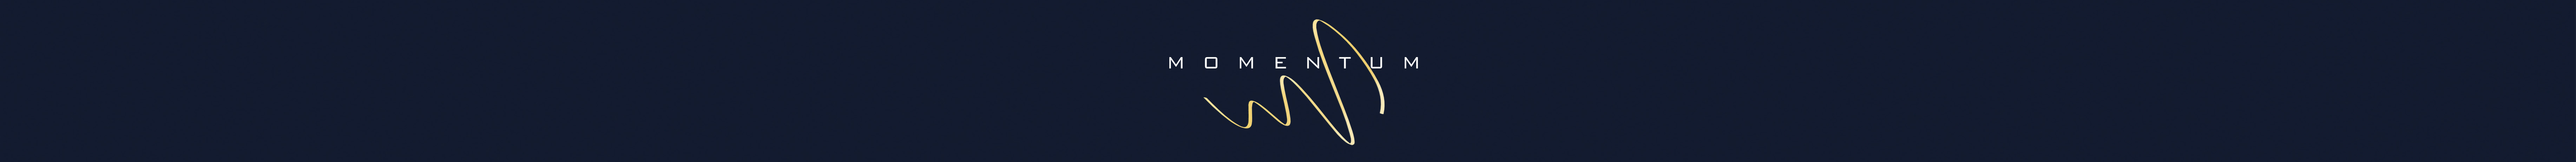 MOMENTUM Studio's profile banner